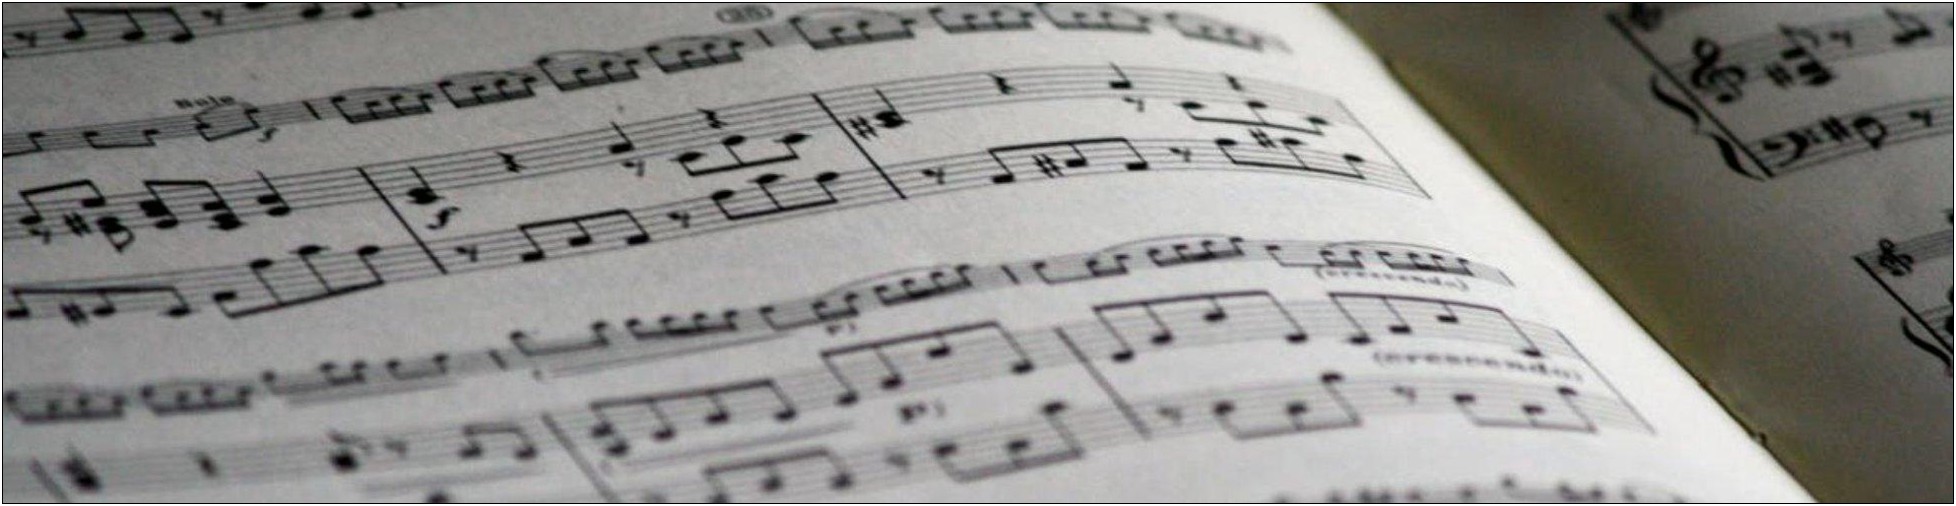 Elementary Music Teacher Resume Skills List